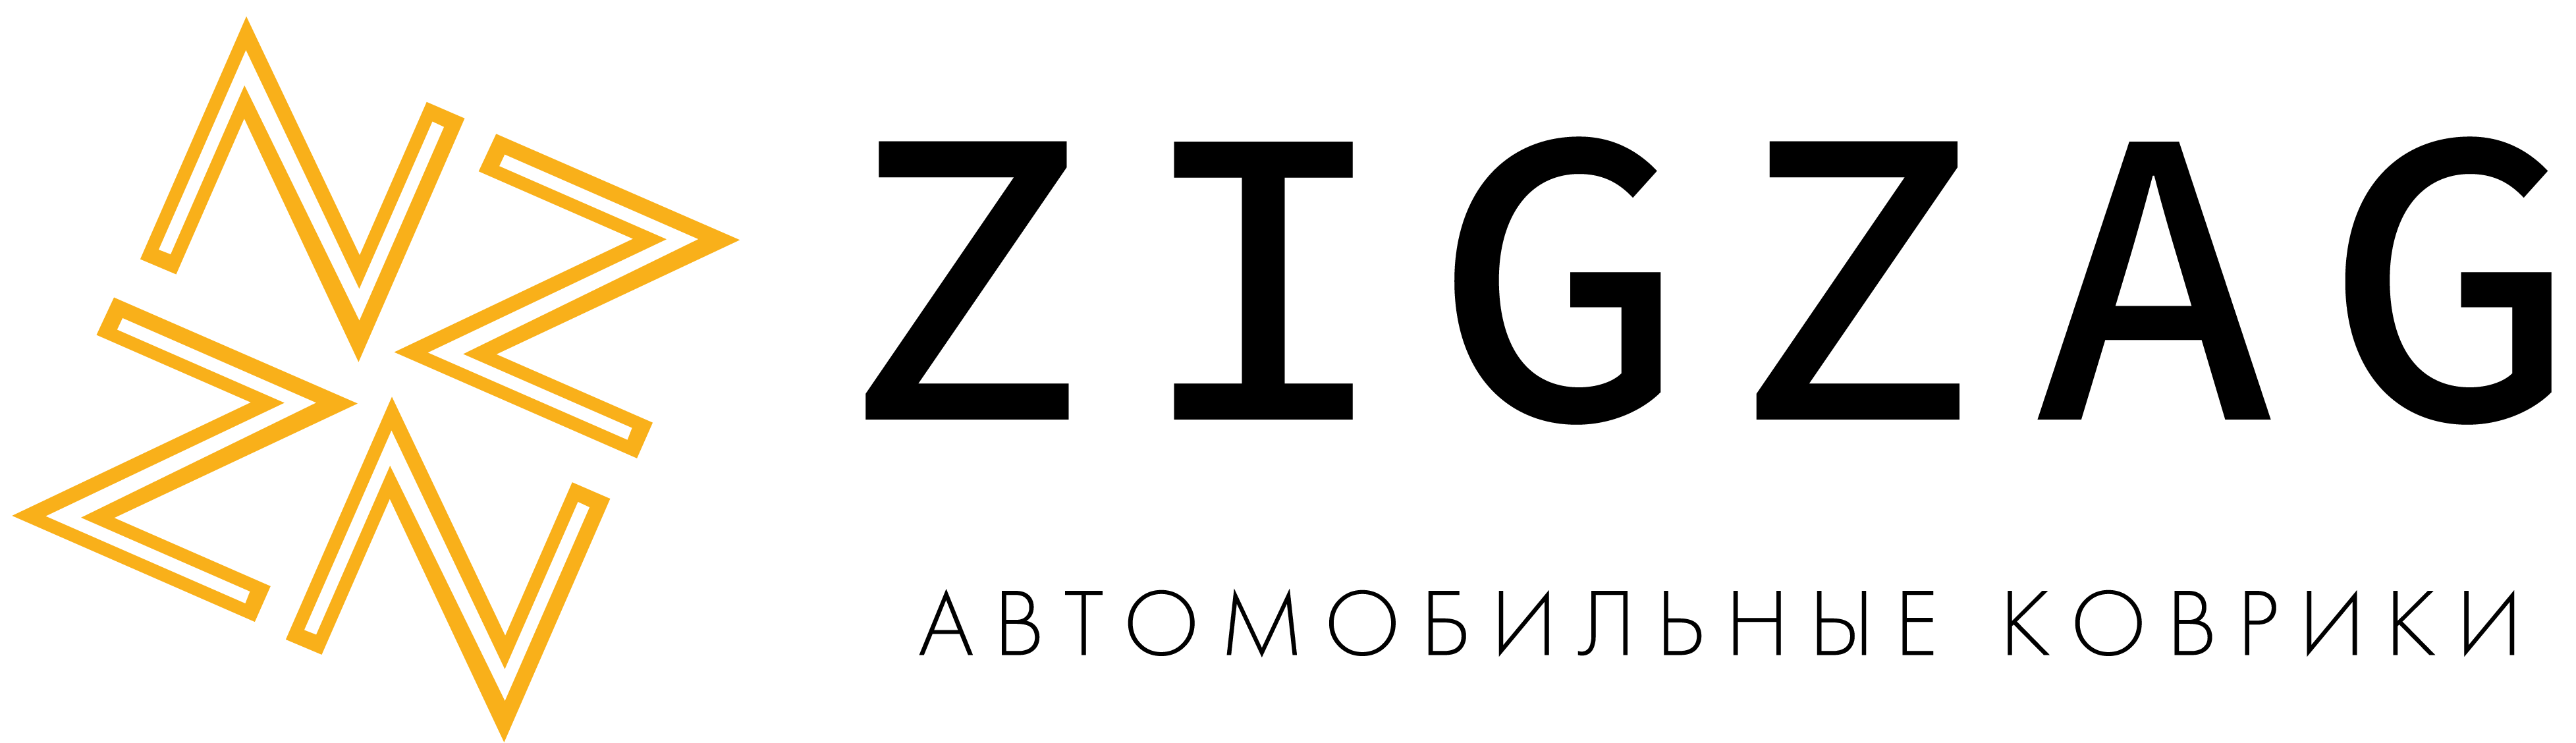 Интернет-магазин Zigzag